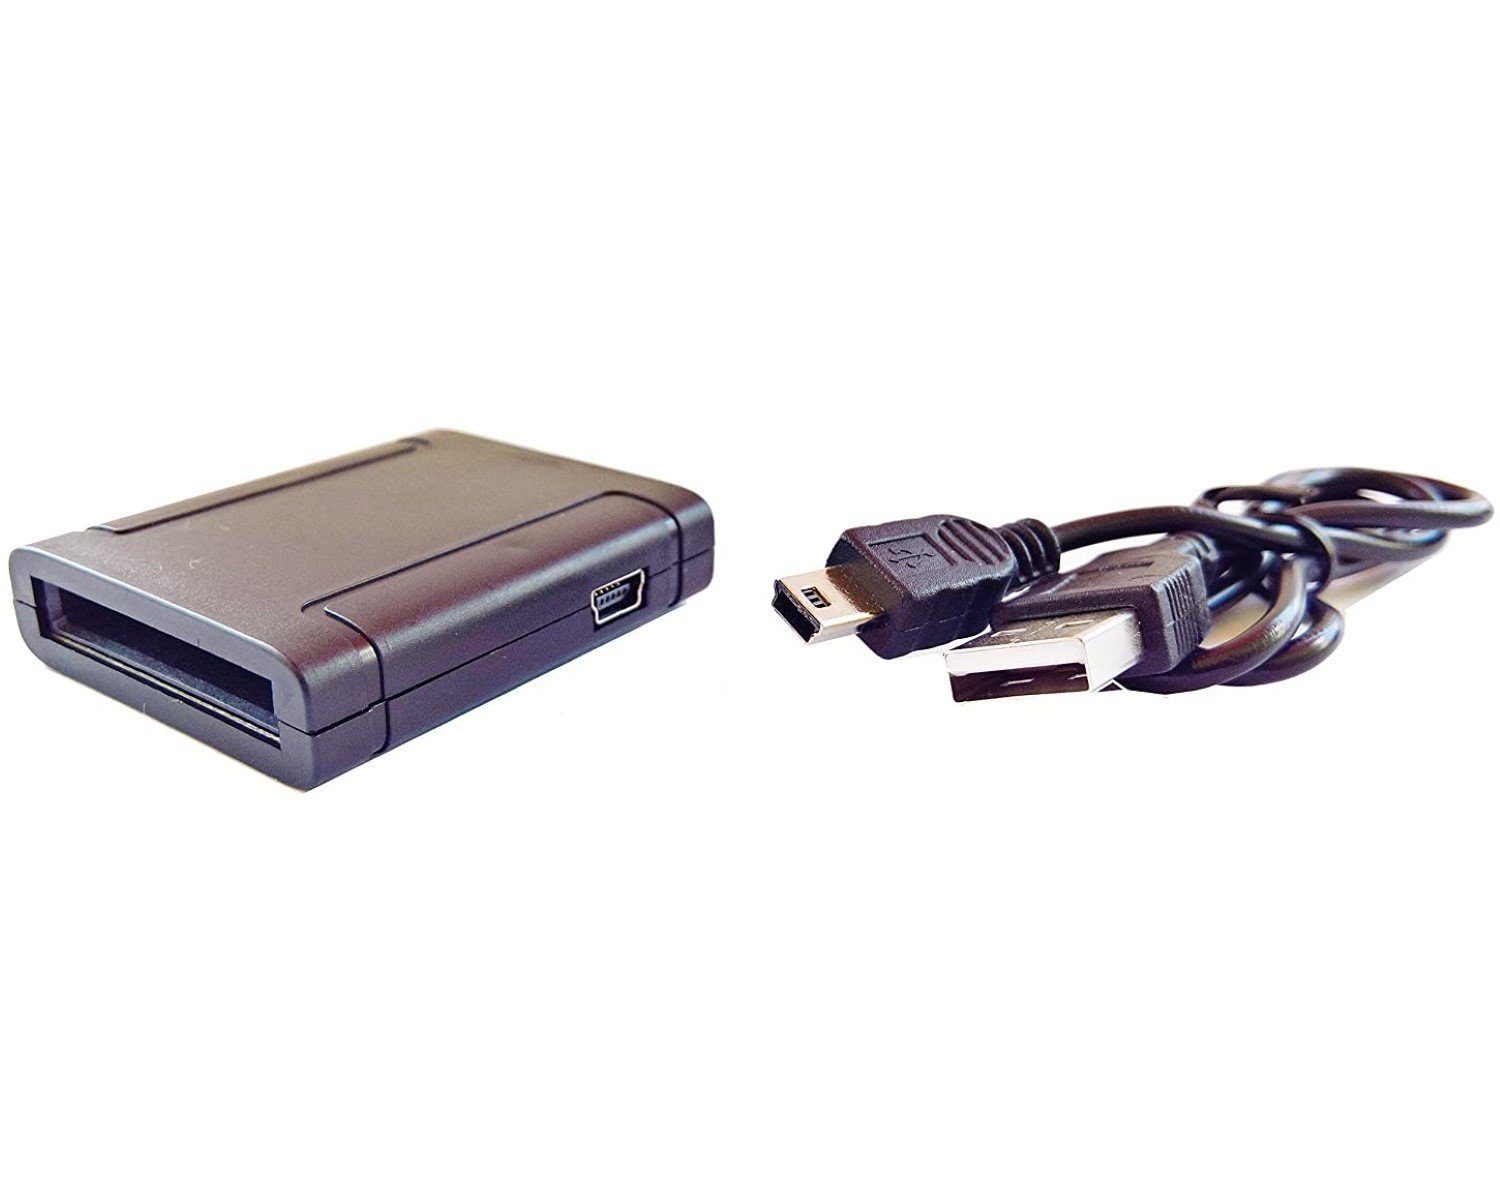 Datel Action Replay PowerSaves Pro Cheat-Modul Netzkabel, USB-Anschluss,  Adapter für Nintendo 3DS 2DS Spiele